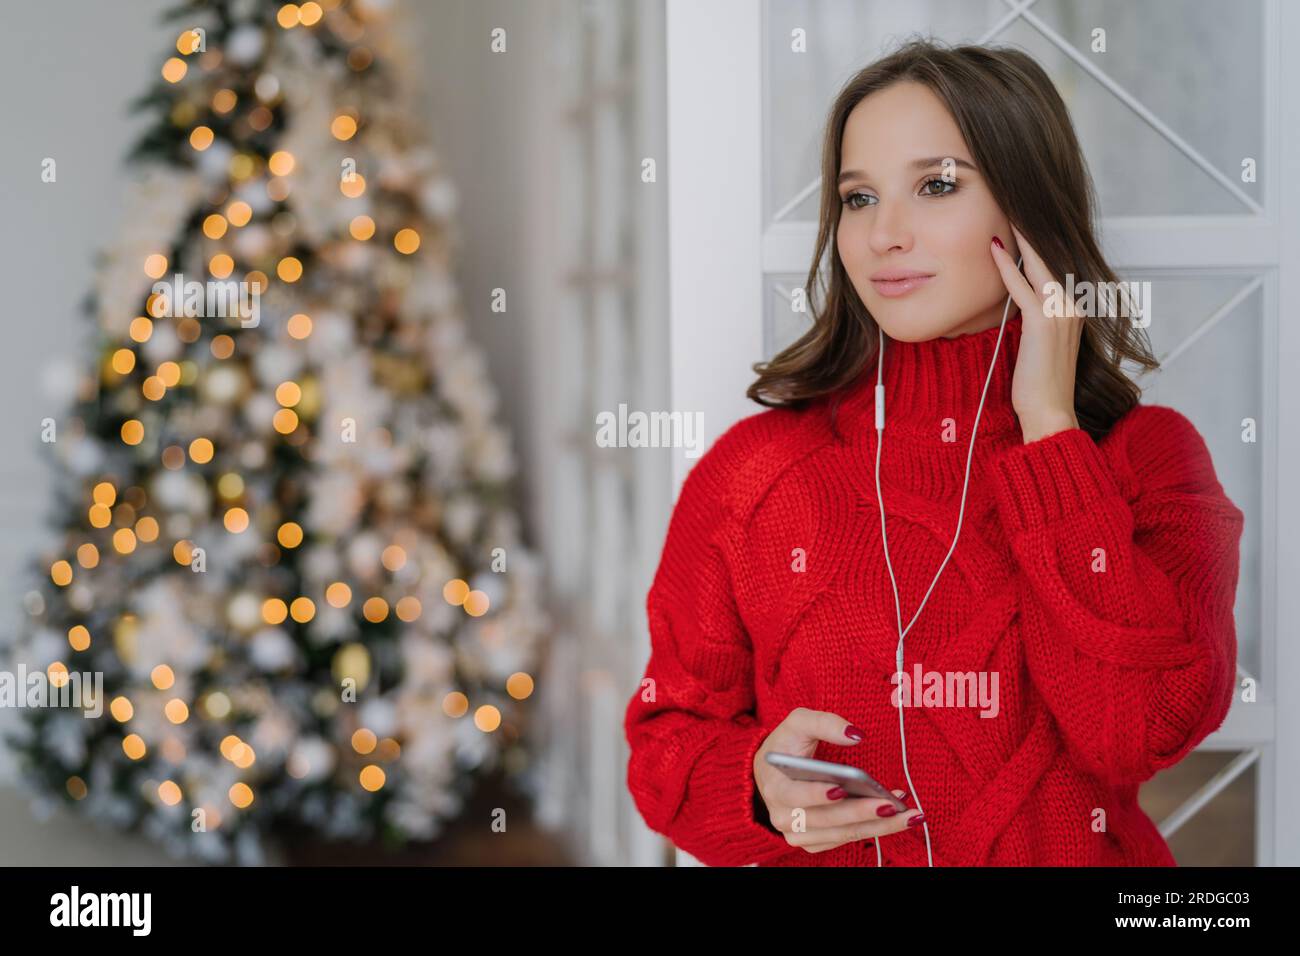 Tech-savvy woman enjoys holidays, uses phone and earphones near Christmas tree. Copy space available. Stock Photo